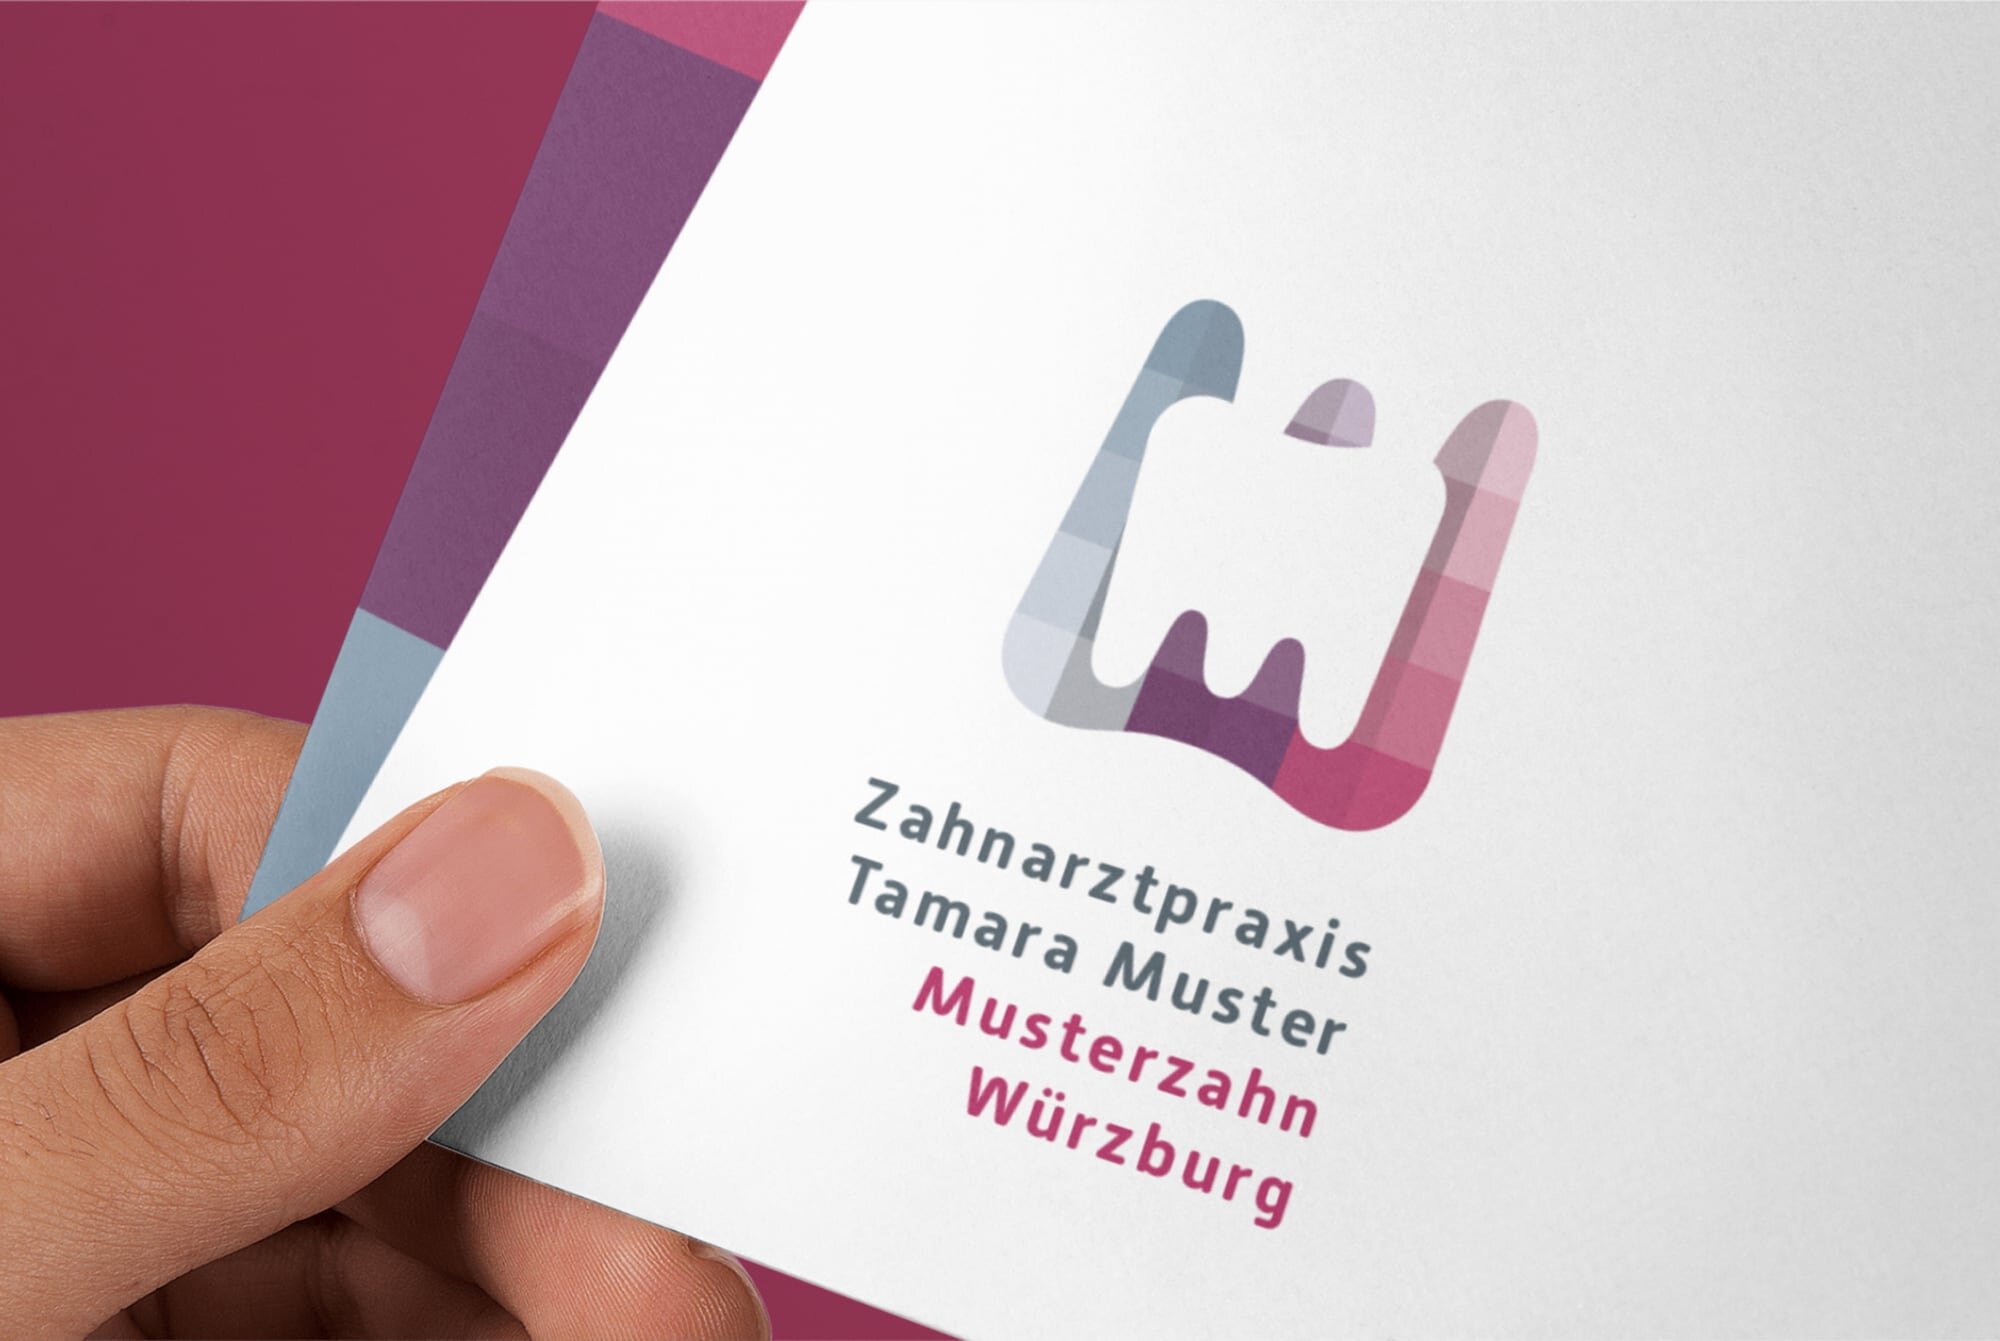 Studio_Michael_Seidl_branding-design_Musterzahn-logo.jpg